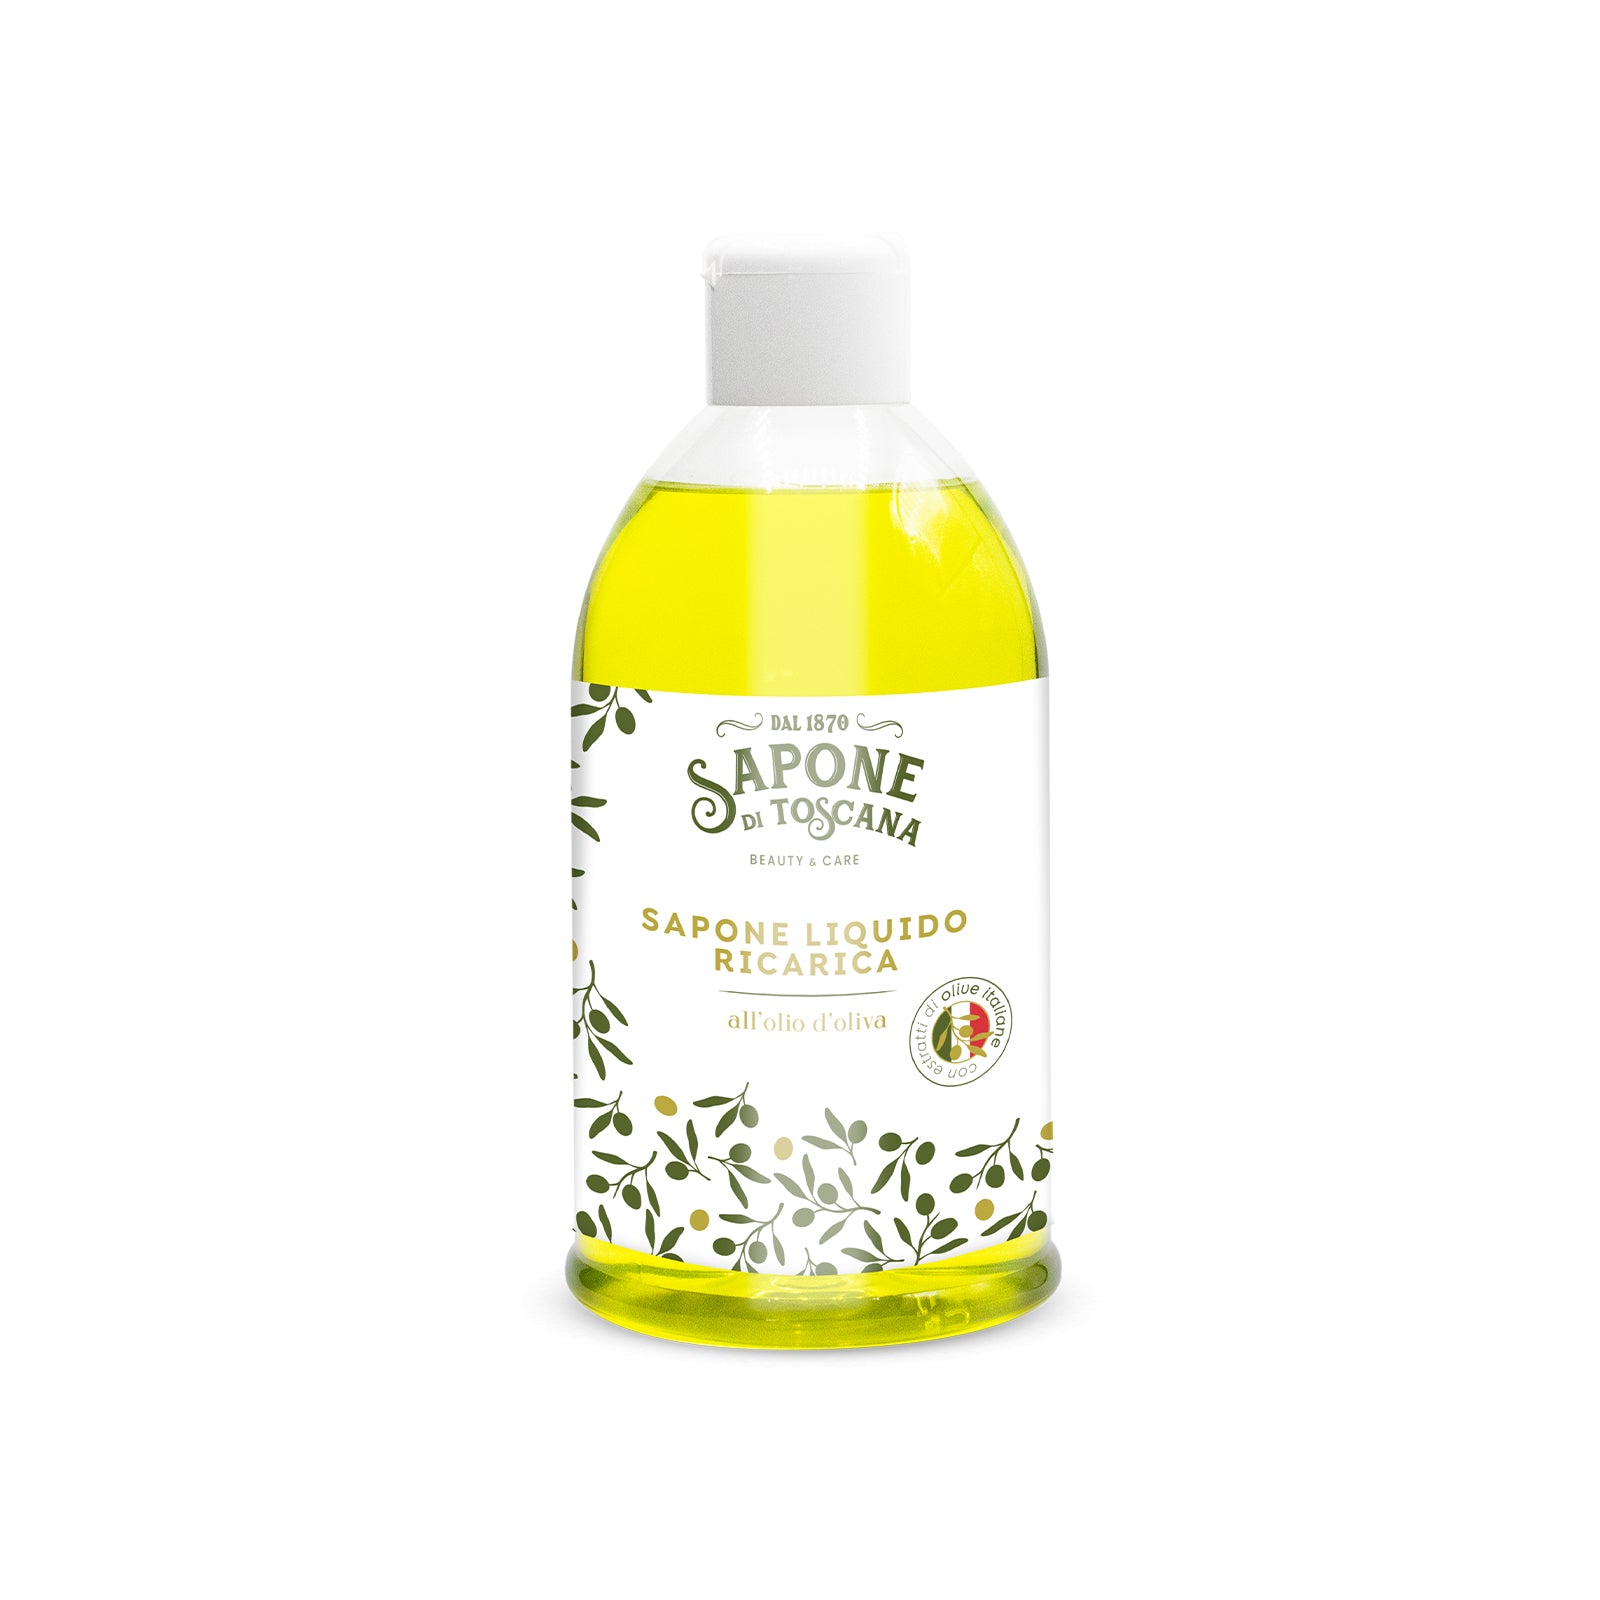 Liquid soap refill - Olive oil